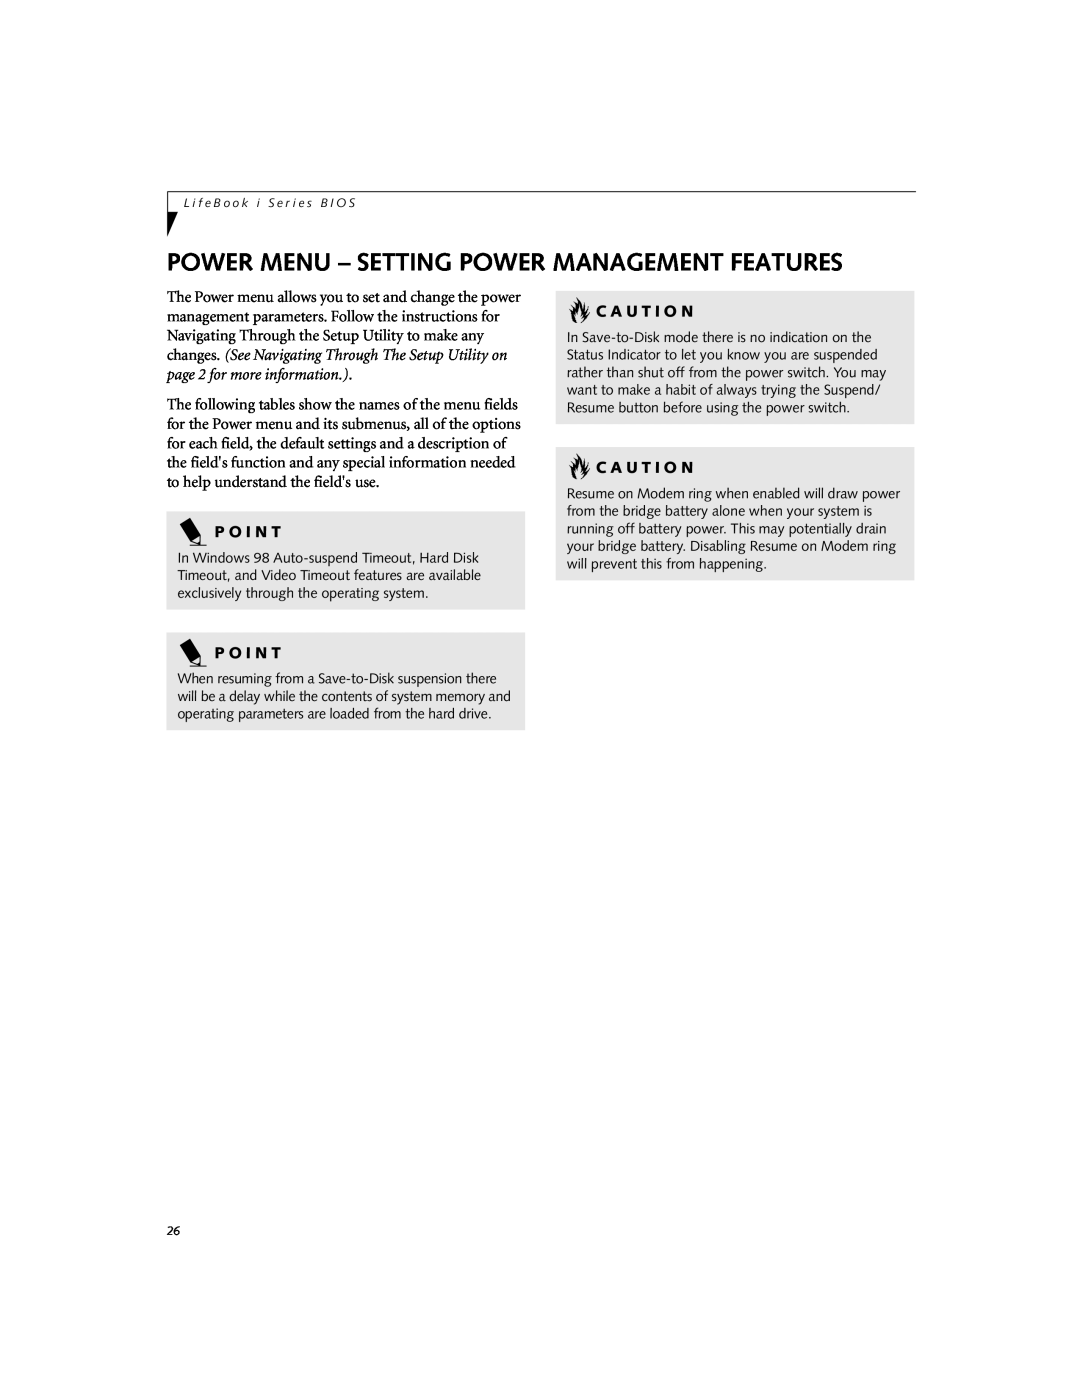 Fujitsu Siemens Computers i Series manual Power Menu - Setting Power Management Features, P O I N T, C A U T I O N 